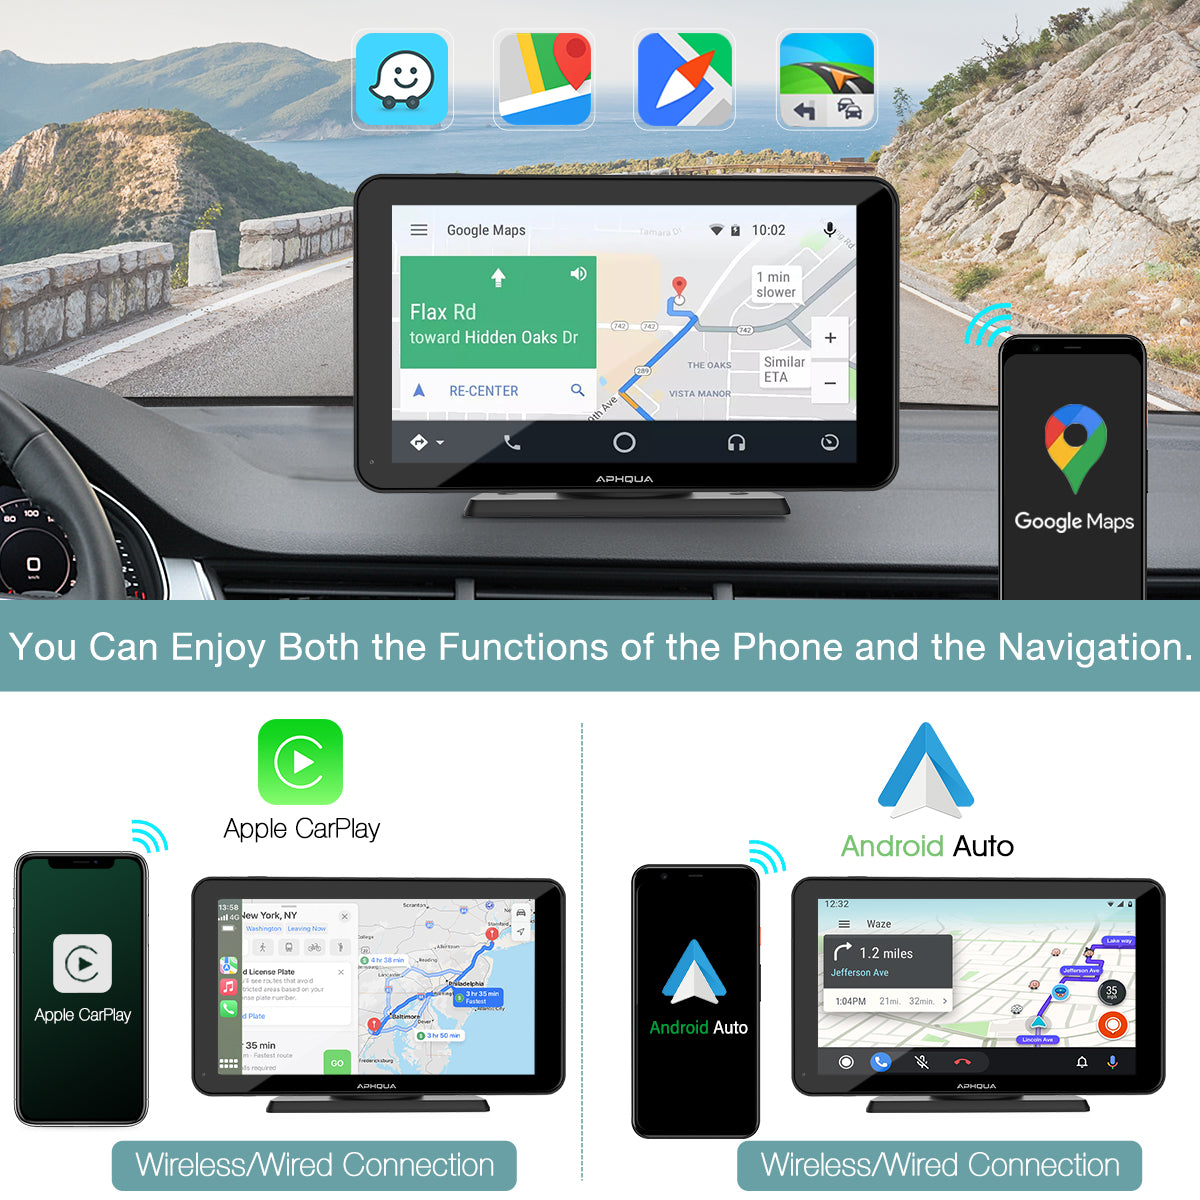 CarPlay inalámbrico de 7 y pantalla táctil inalámbrica Android